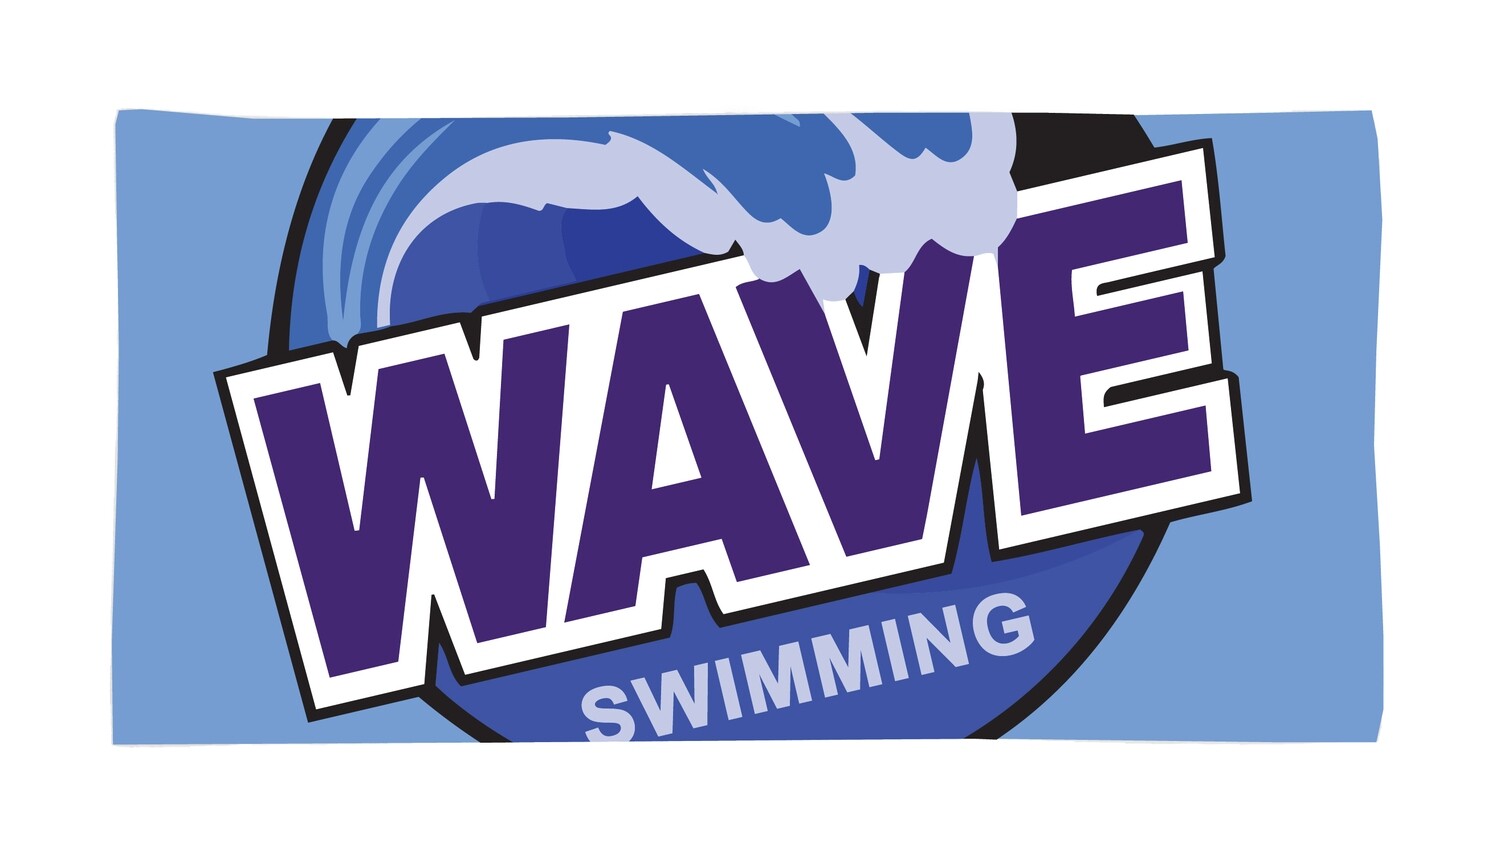 Wave Swimming 30x60 Pool / Beach Towel